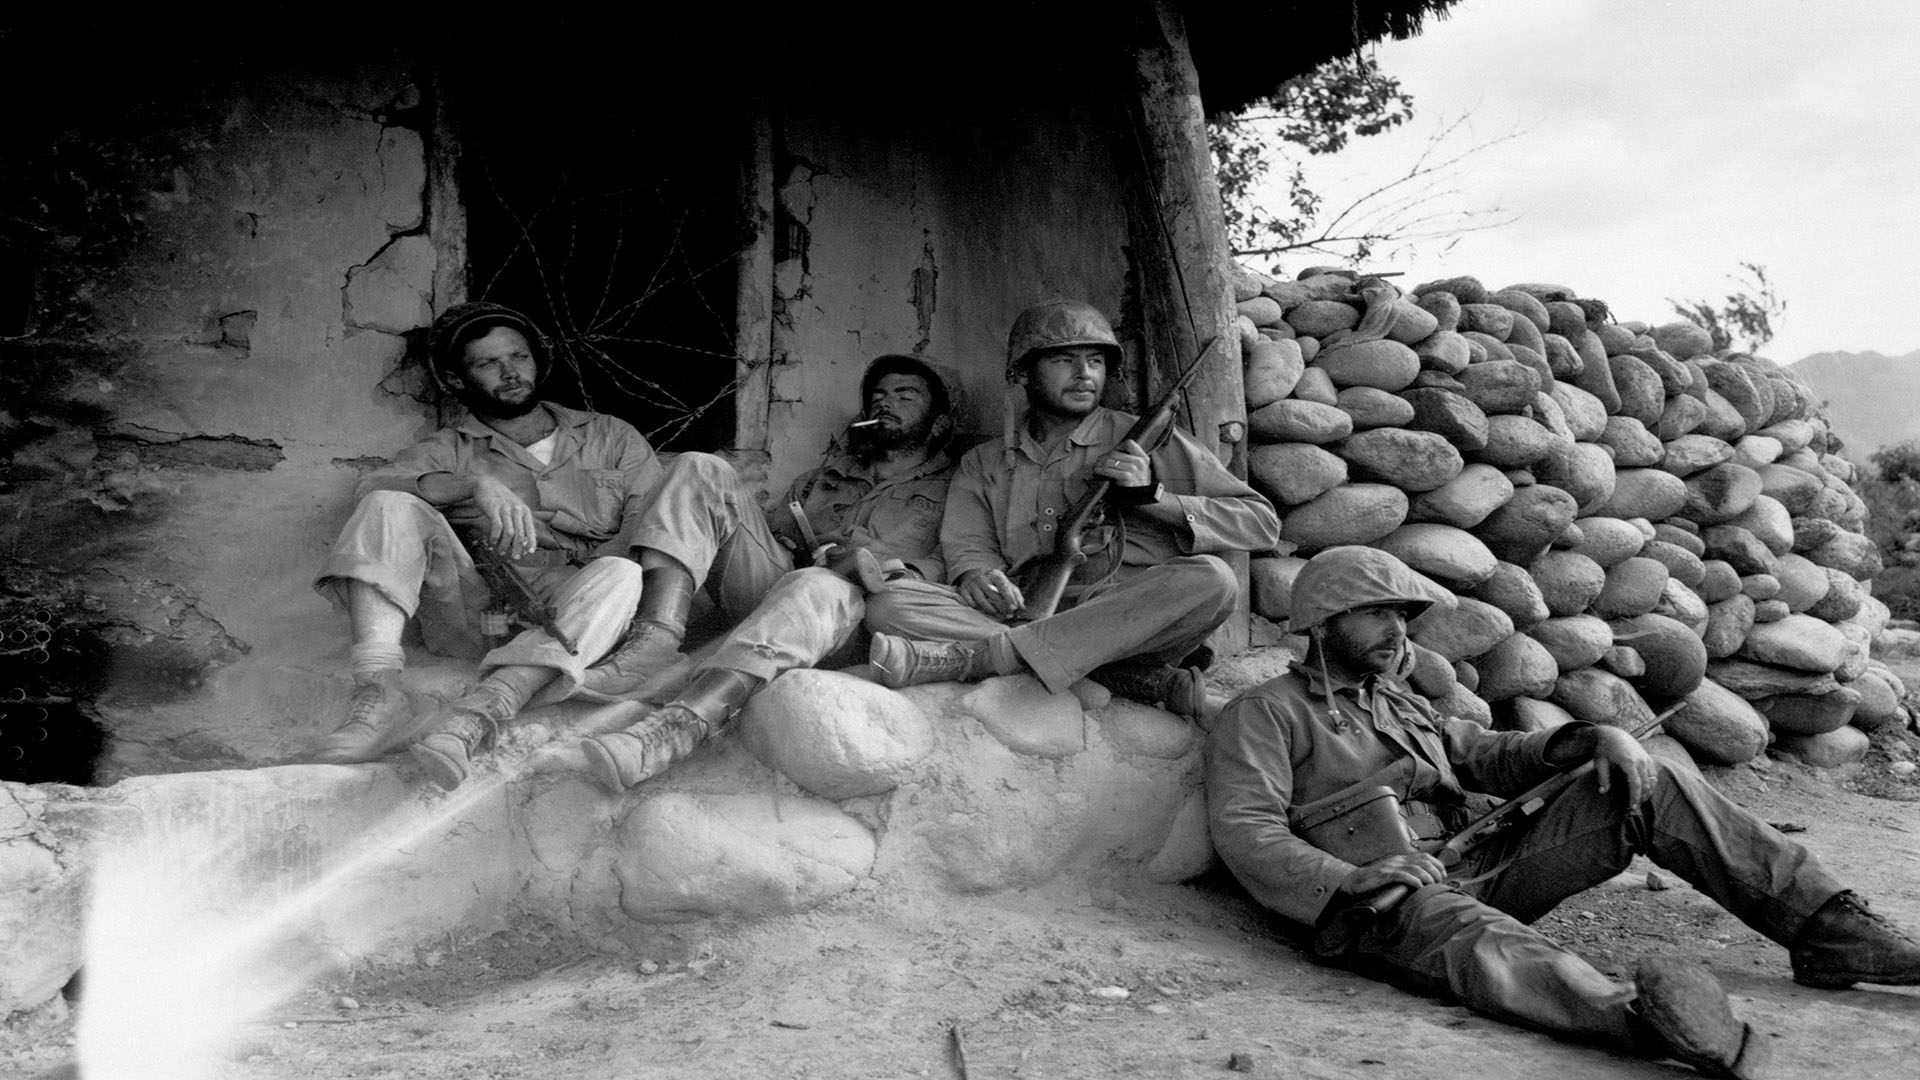 General 1920x1080 Korean War United States Marine Corps monochrome men helmet gun lying on back war rocks military